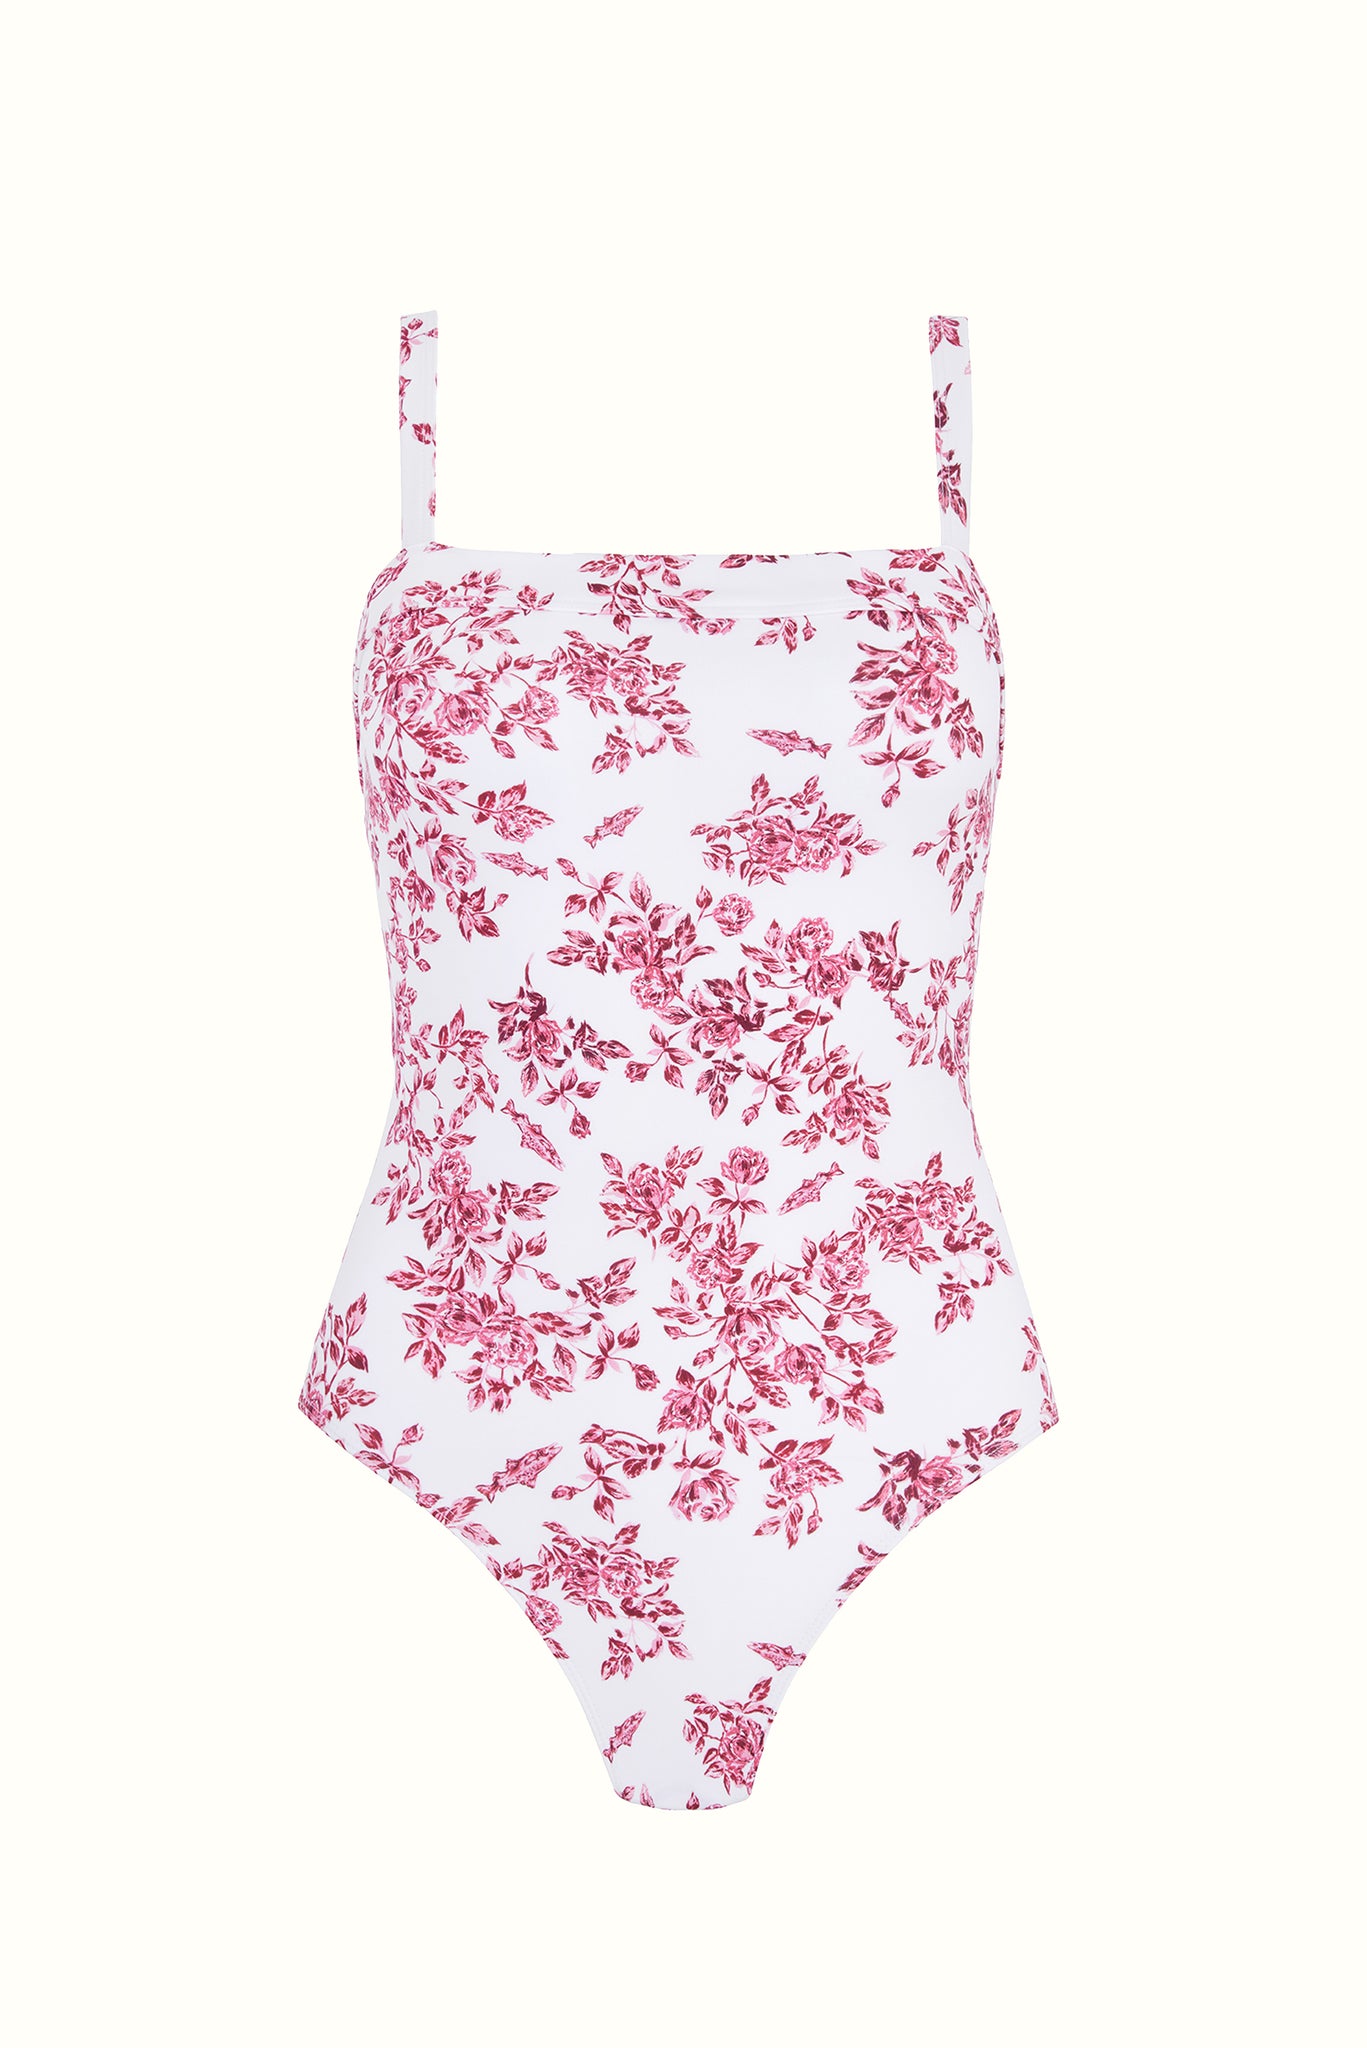 Nell Vintage Rose Pink Print Swimsuit | Emilia Wickstead X Passalacqua